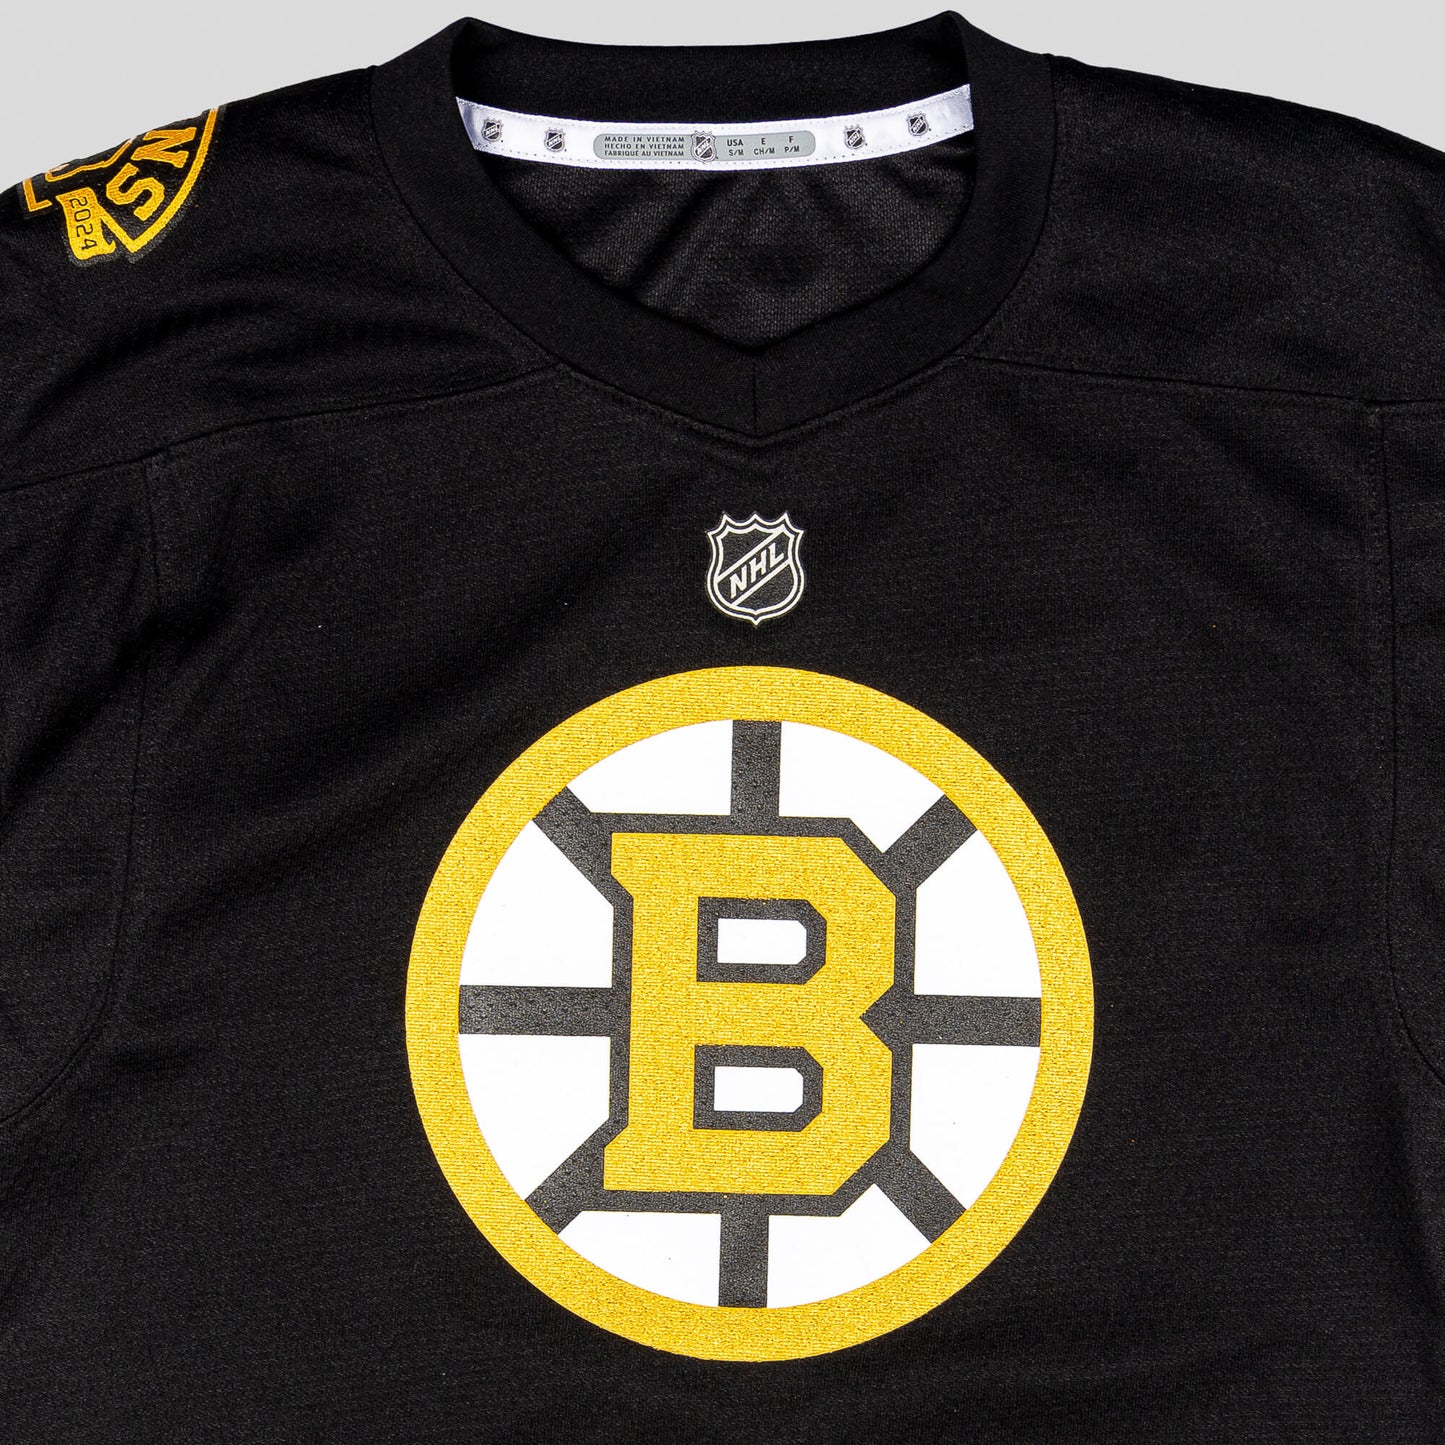 Outer Stuff Nhl Replica Home/Team Color Jersey - Boston Bruins - Black